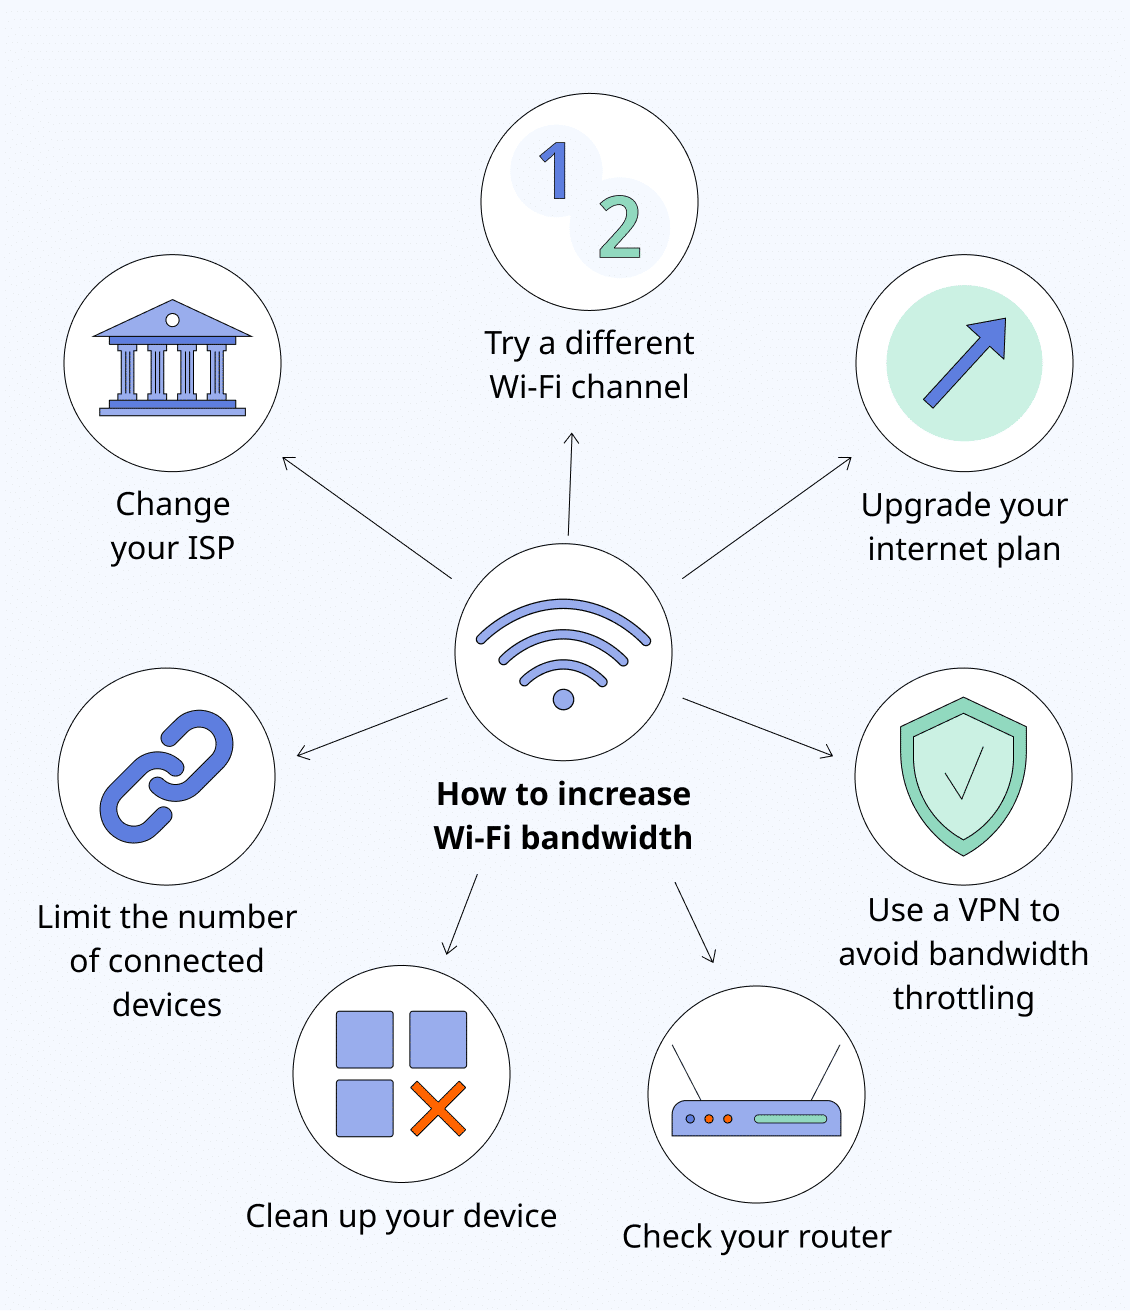 How to increase Wi-Fi bandwidth